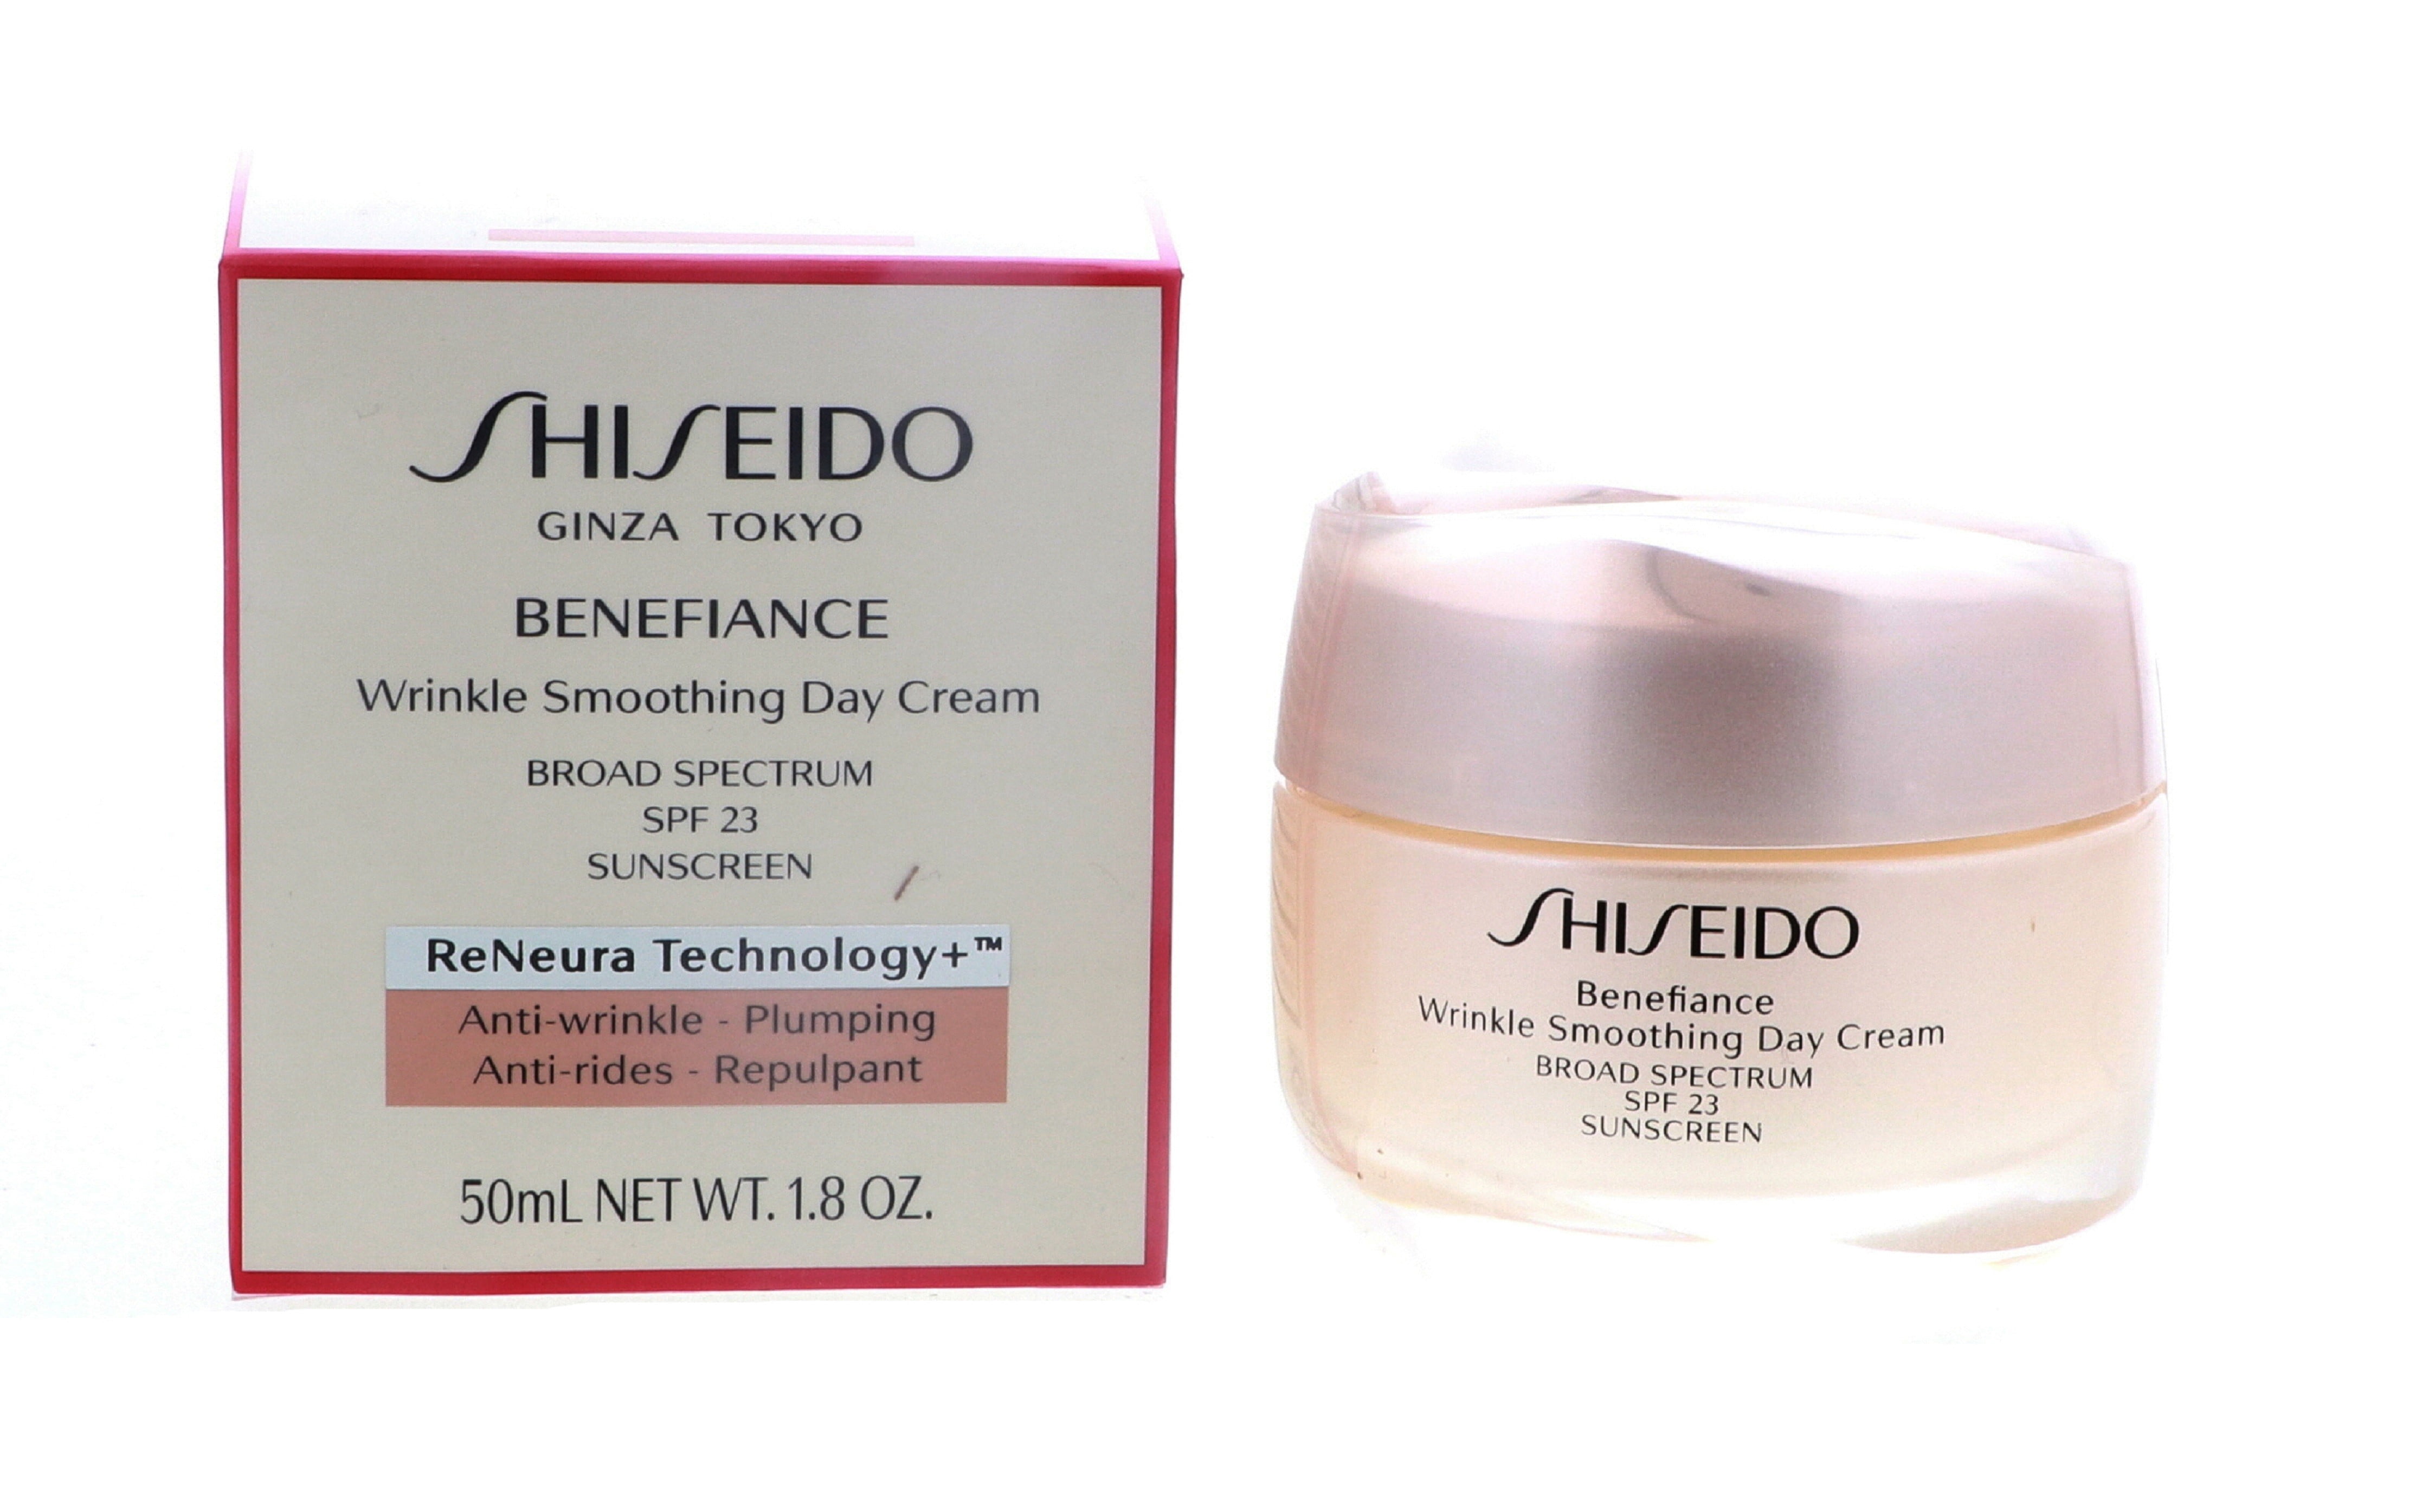 Shiseido Ginza Tokyo Benefiance Wrinkle Smoothing Day Cream broad Spectrum SPF 23 Sunscreen. Shiseido benefiance wrinkle smoothing